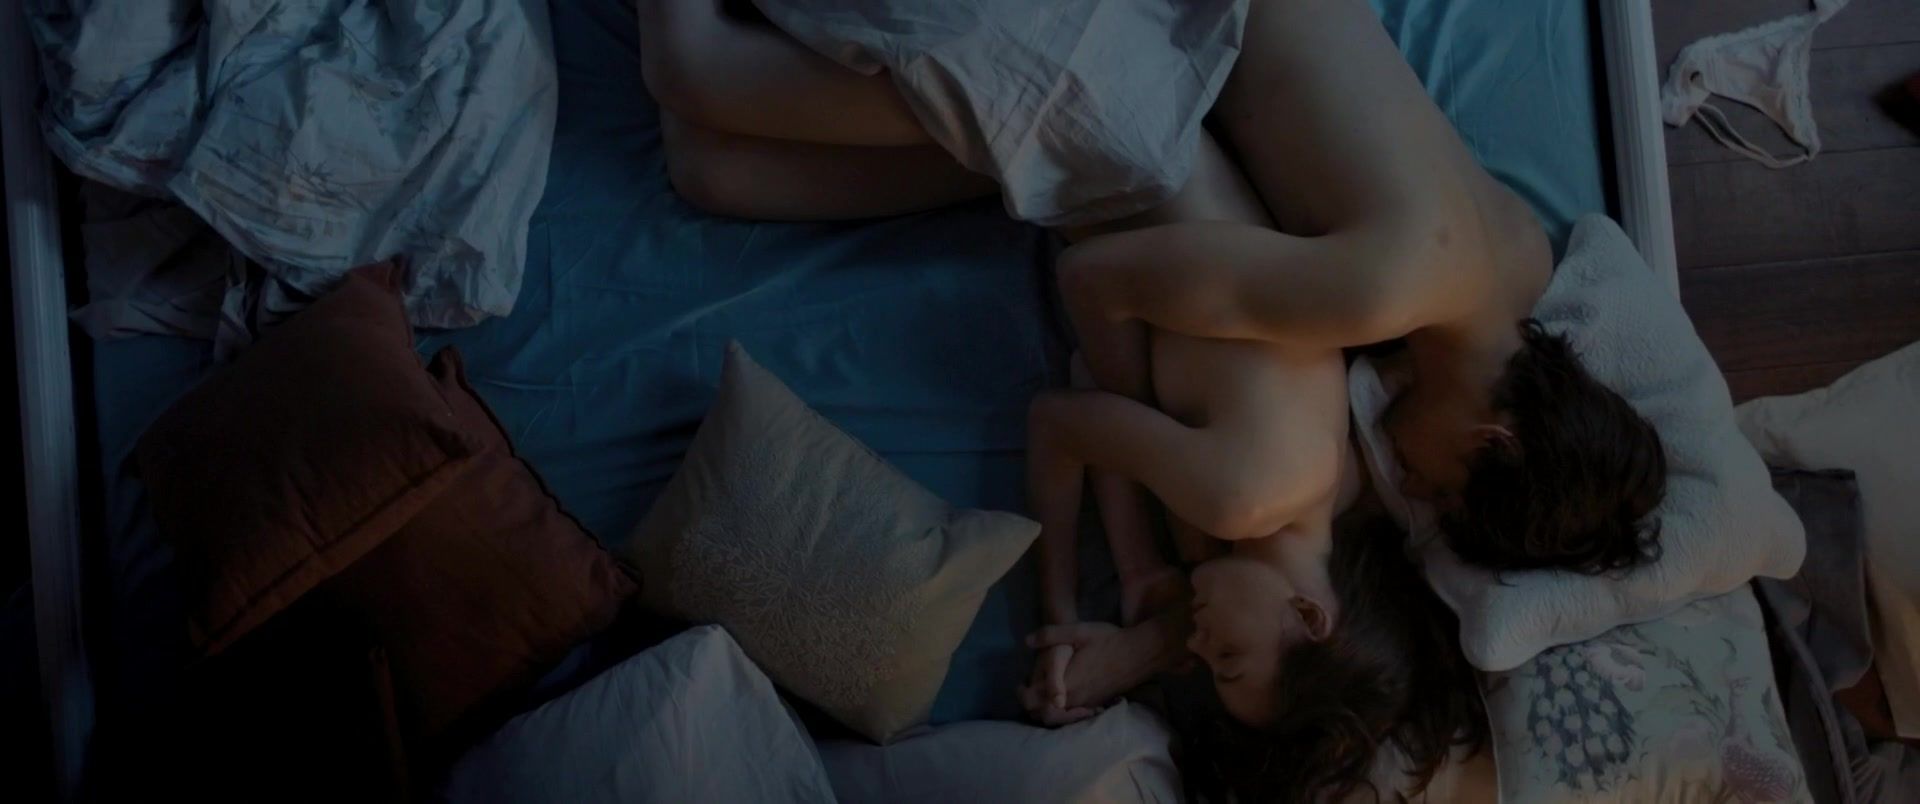 Sex Toys Sexy Vicky Luengo nude - Barcelona, Nit D’Hivern (2015) Movie - 1